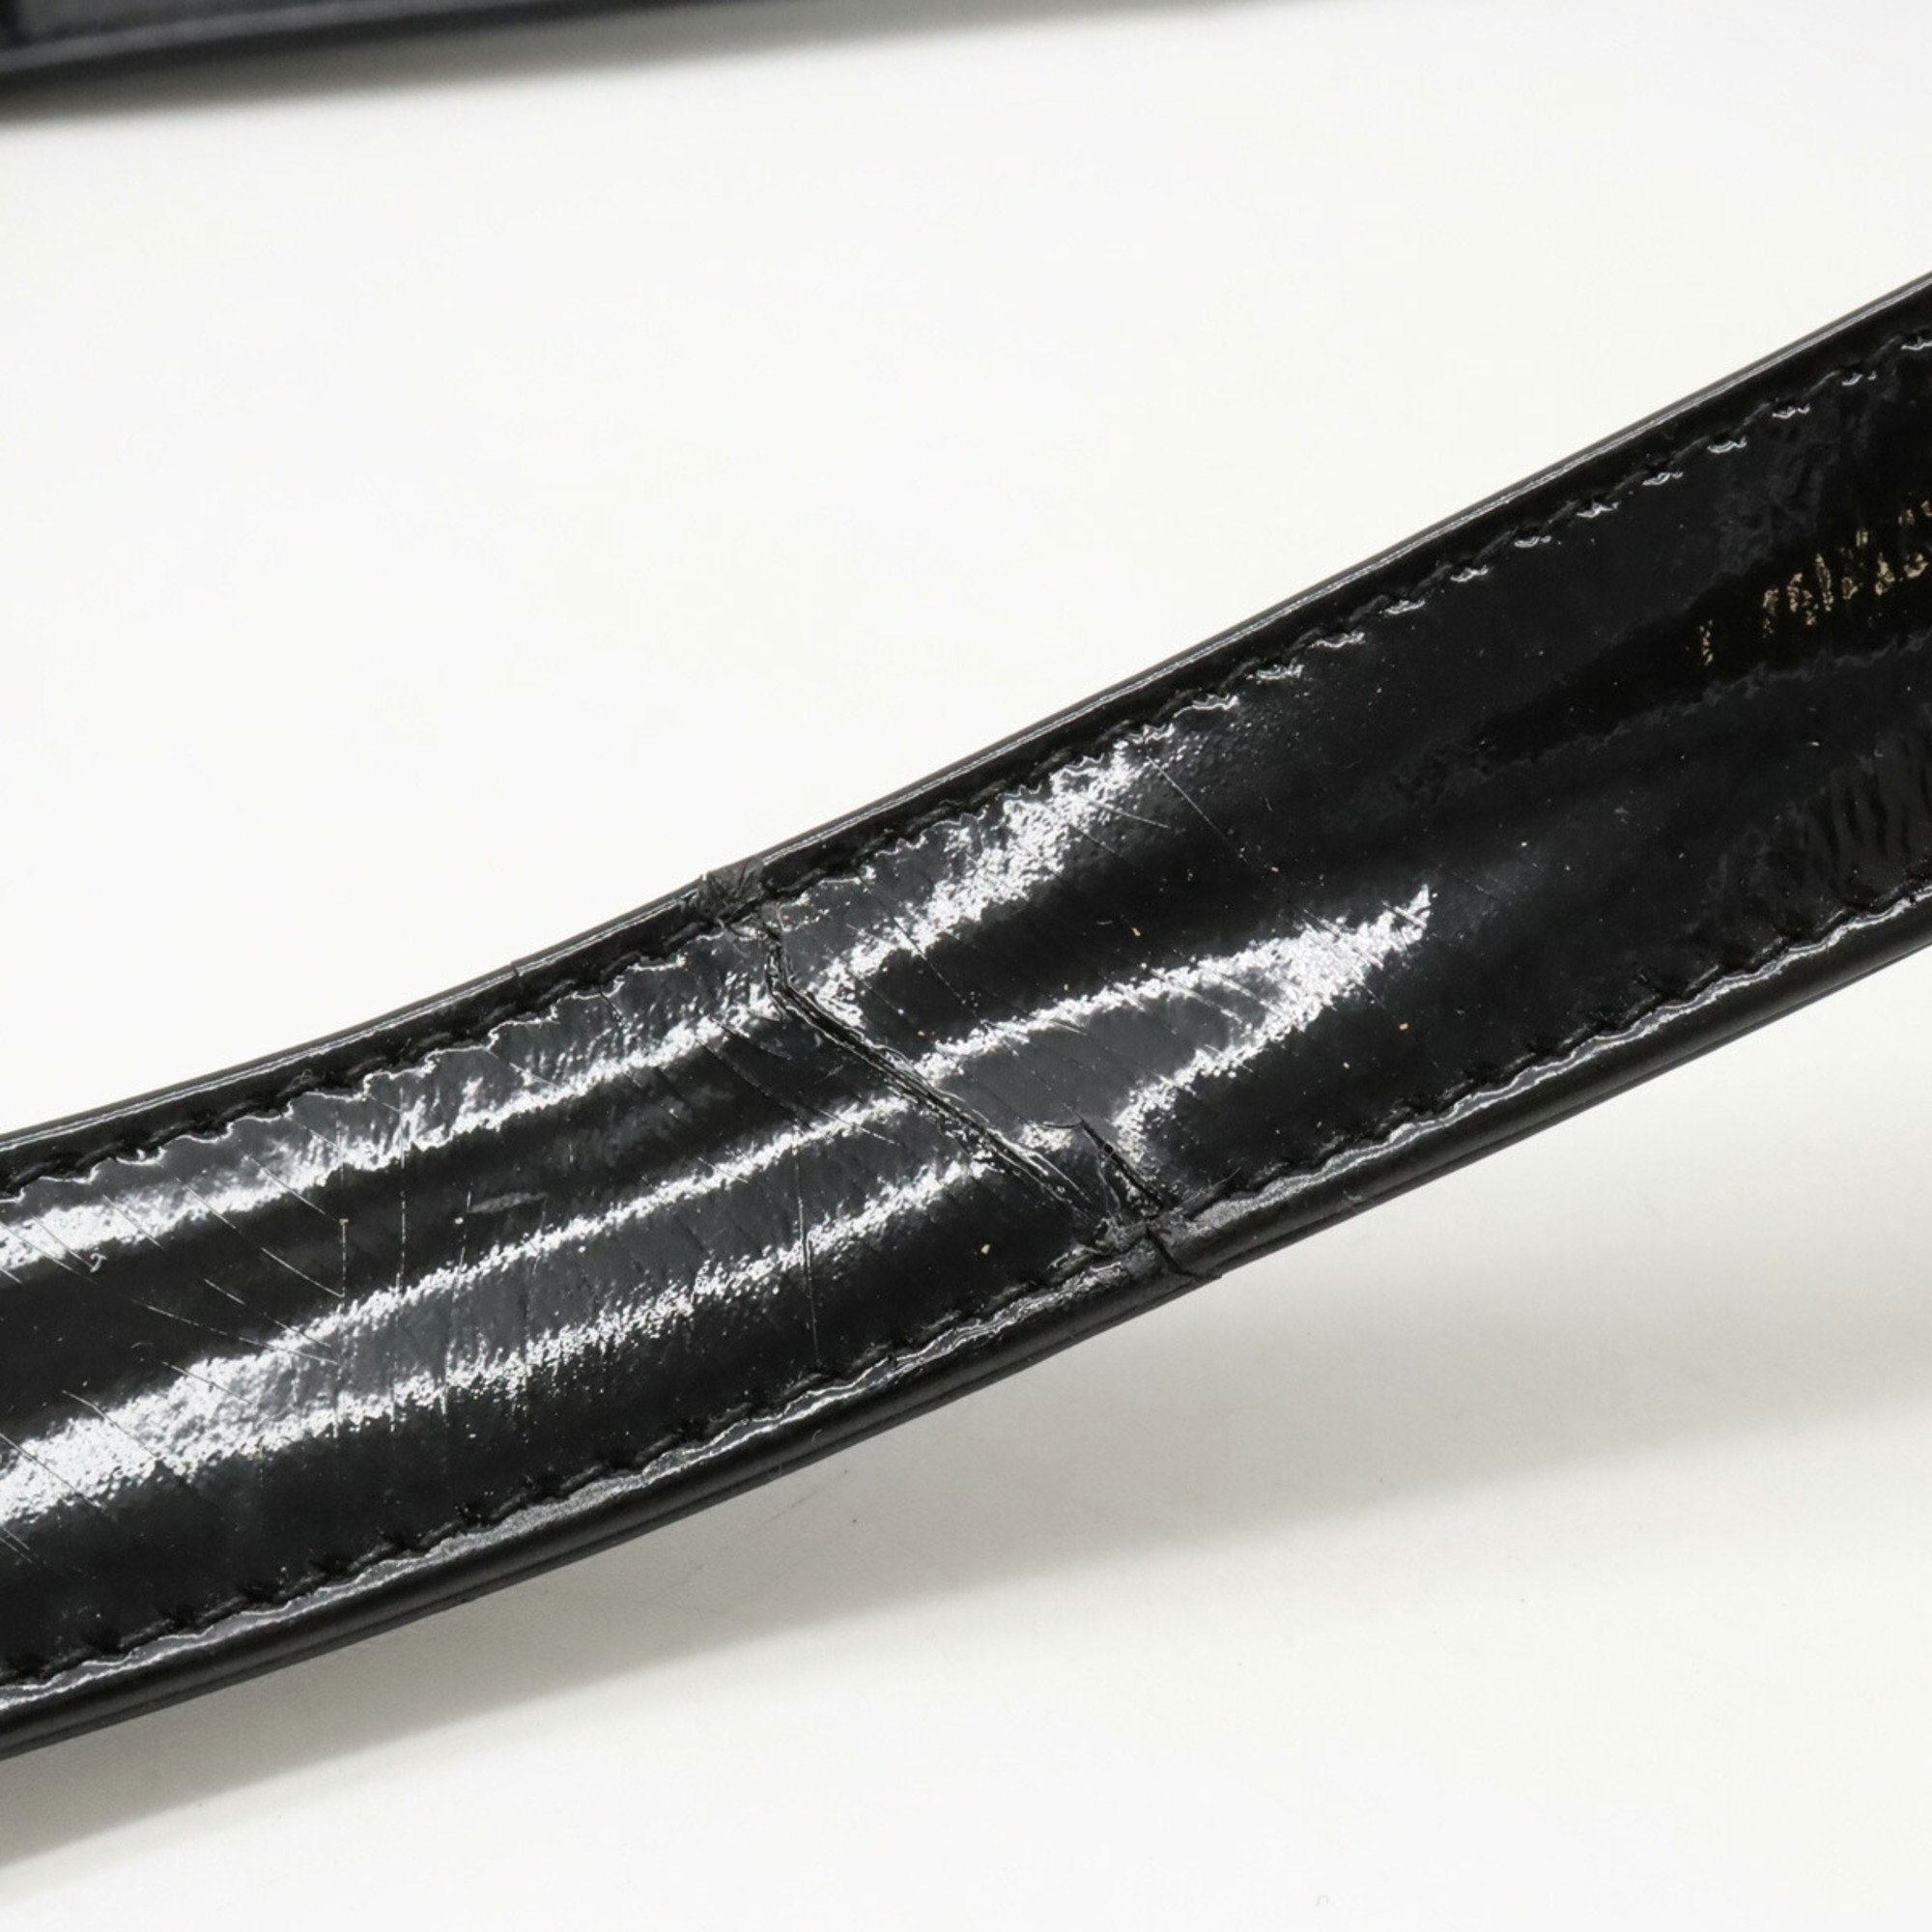 CHANEL Coco Mark Chain Shoulder Bag Enamel Leather Black A05572